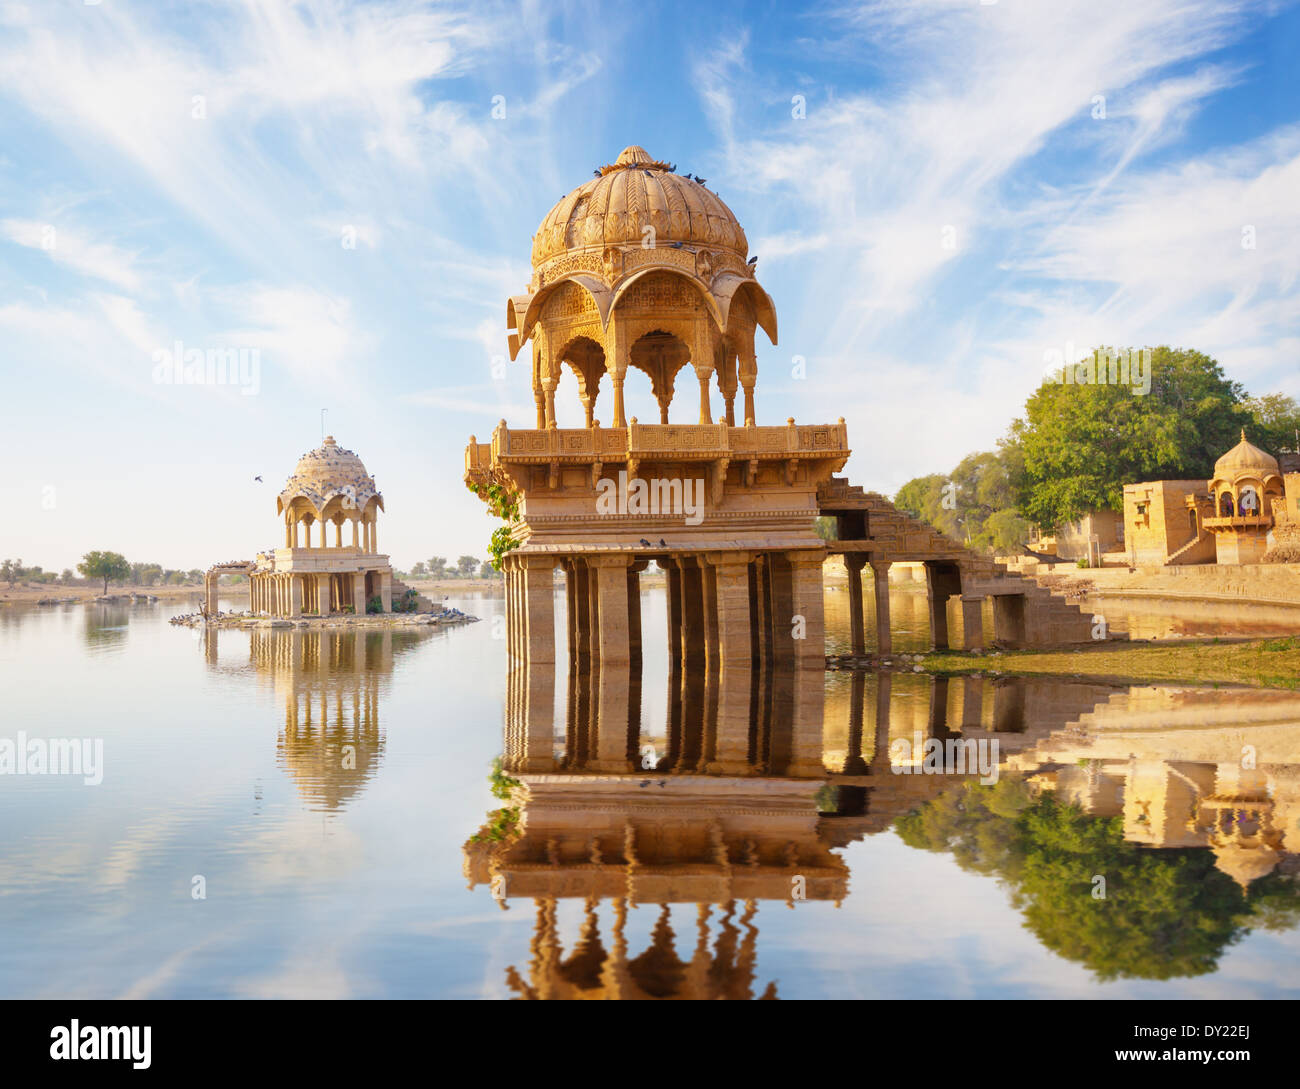 Monumenti indiani - Gadi Sagar tempio sul lago Gadisar - Jaisalmer, Rajasthan, India del nord Foto Stock